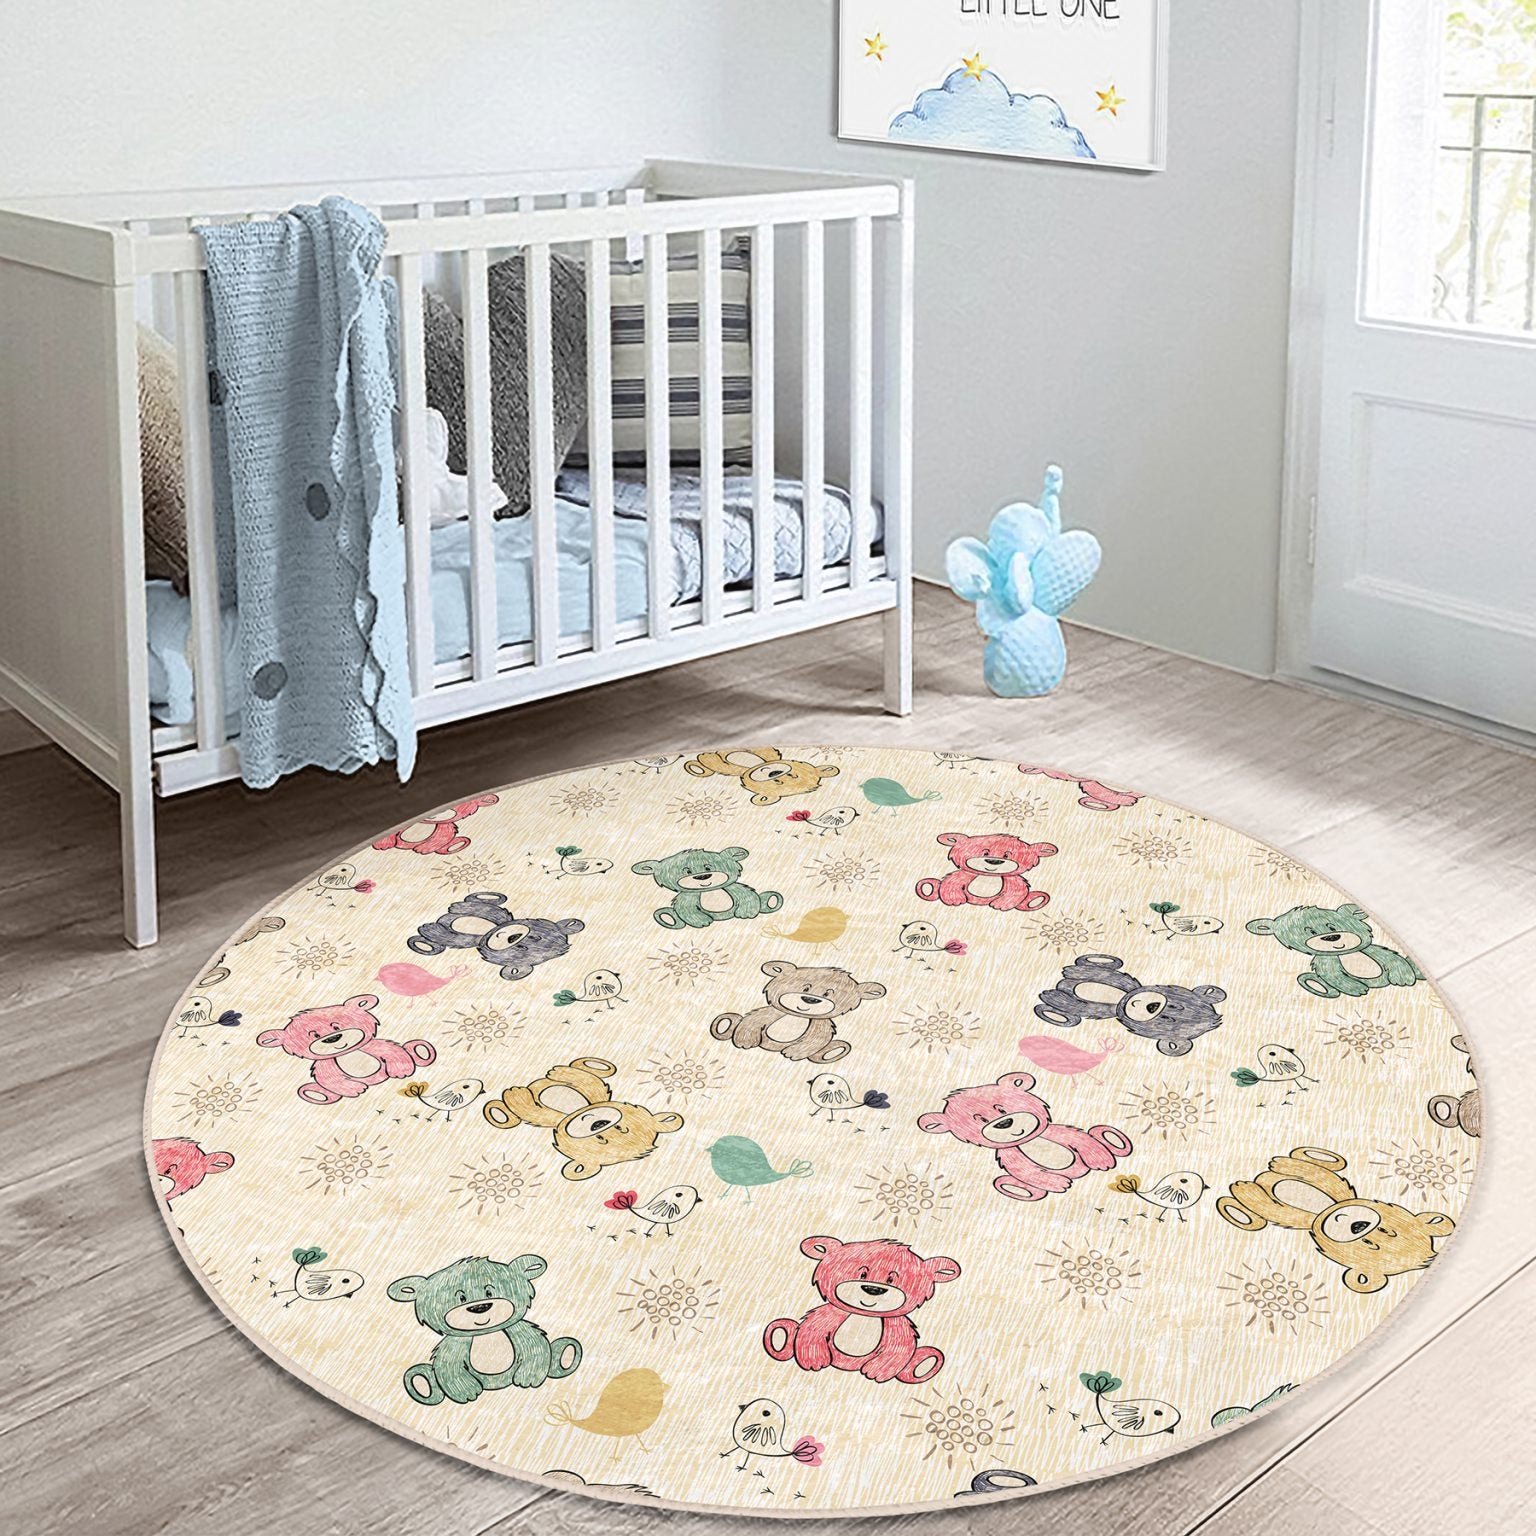 Playful Baby Room Rug with Vibrant Teddy Bears